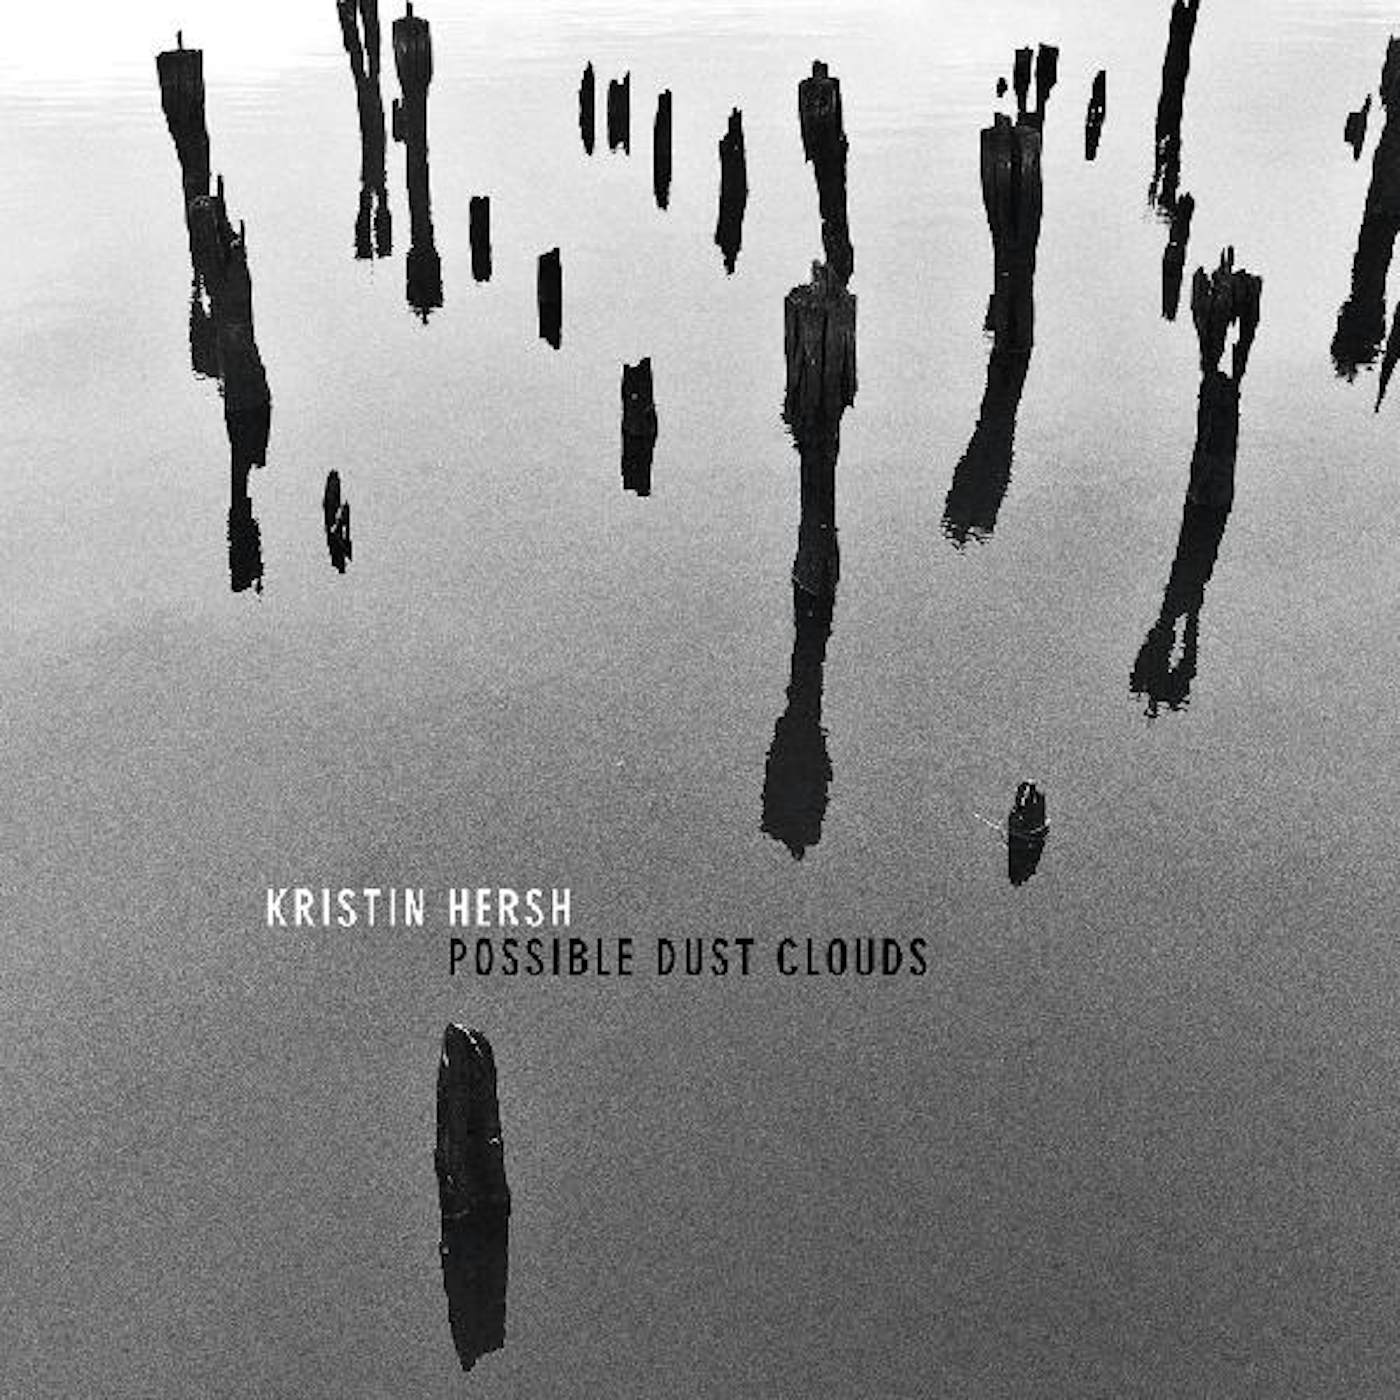 Kristin Hersh POSSIBLE DUST CD